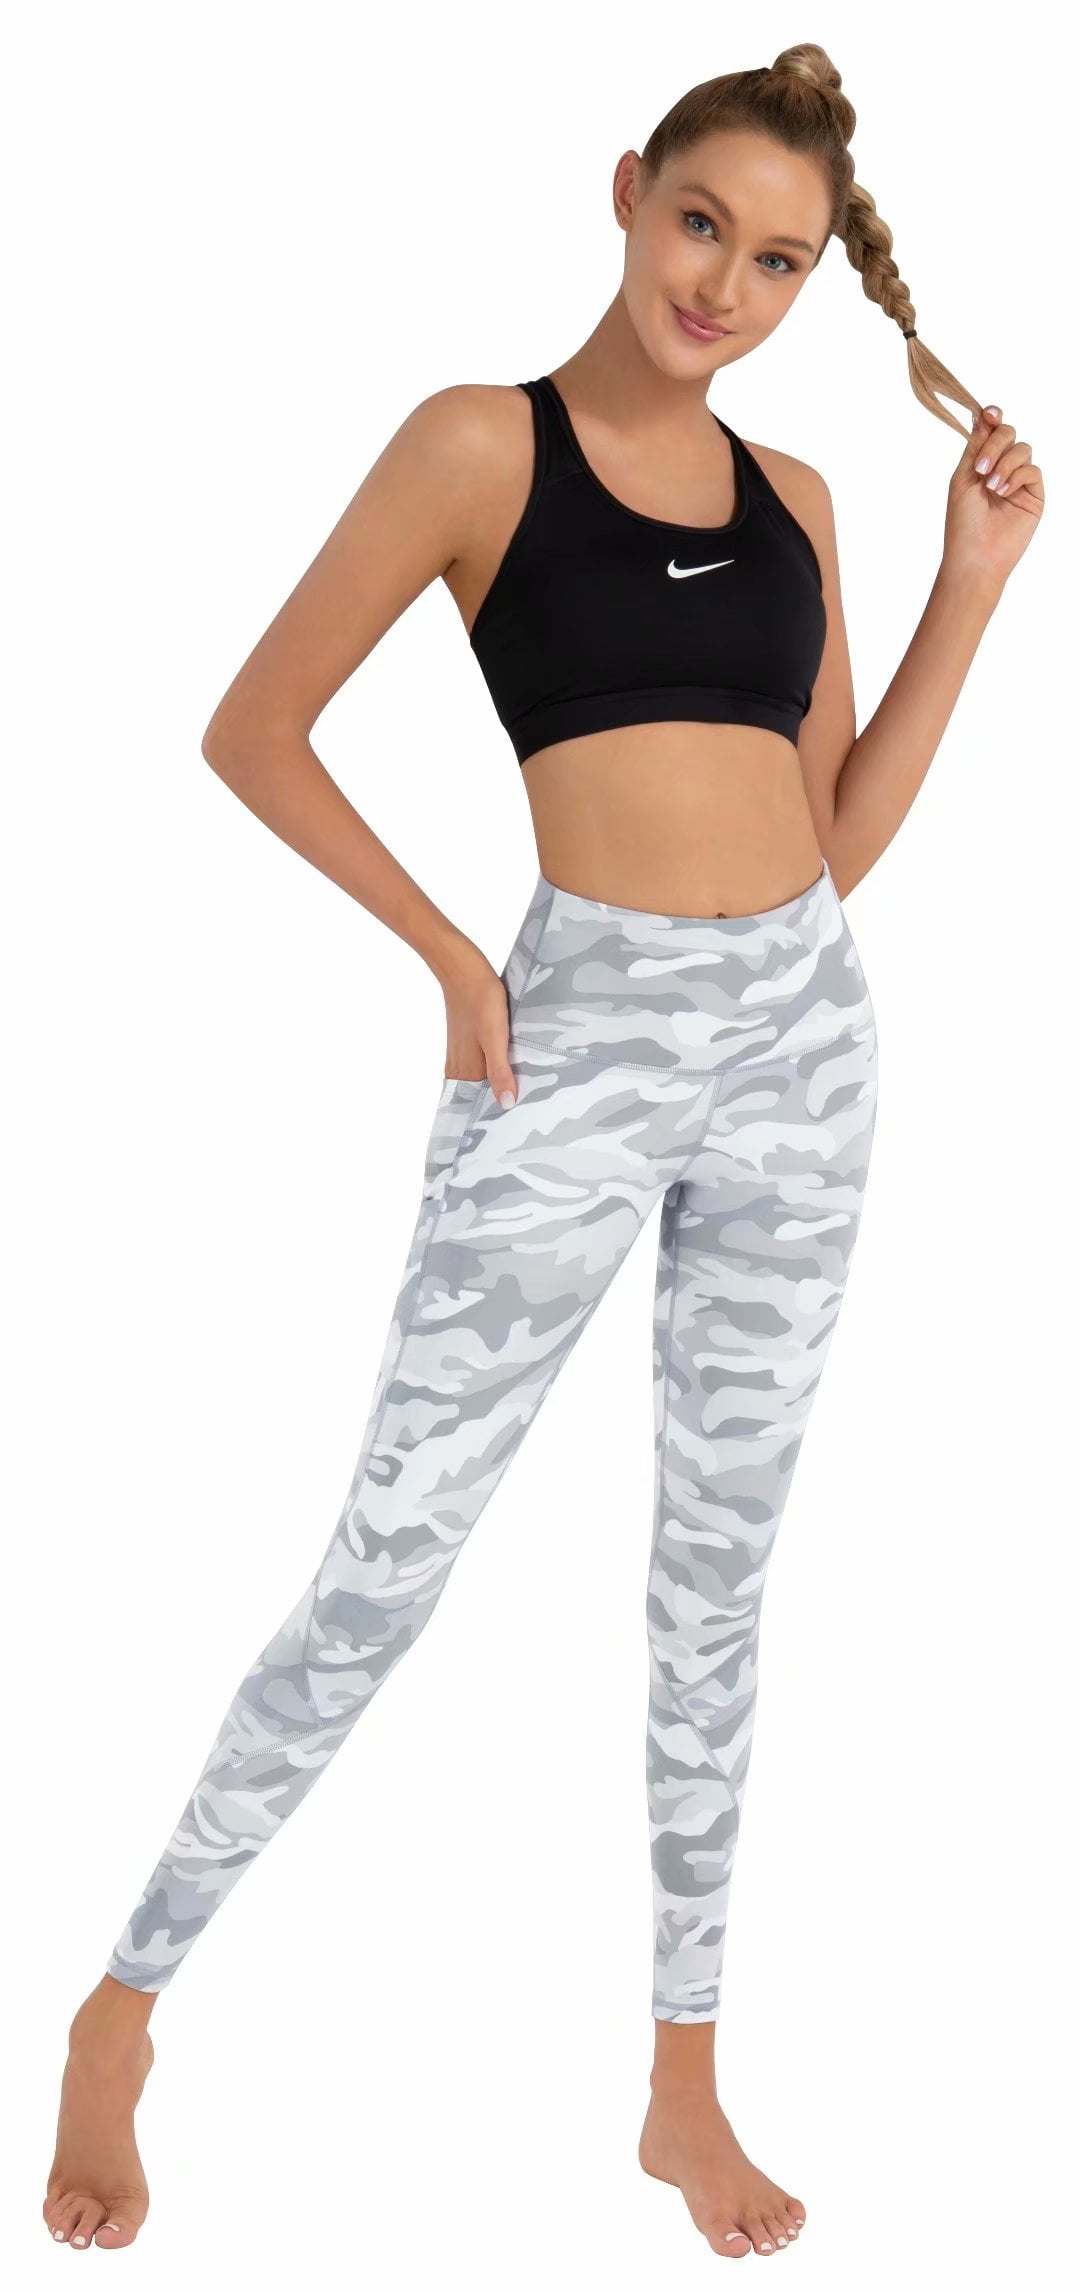 LifeSky Yoga Pants for Women, High Waisted Tummy Control